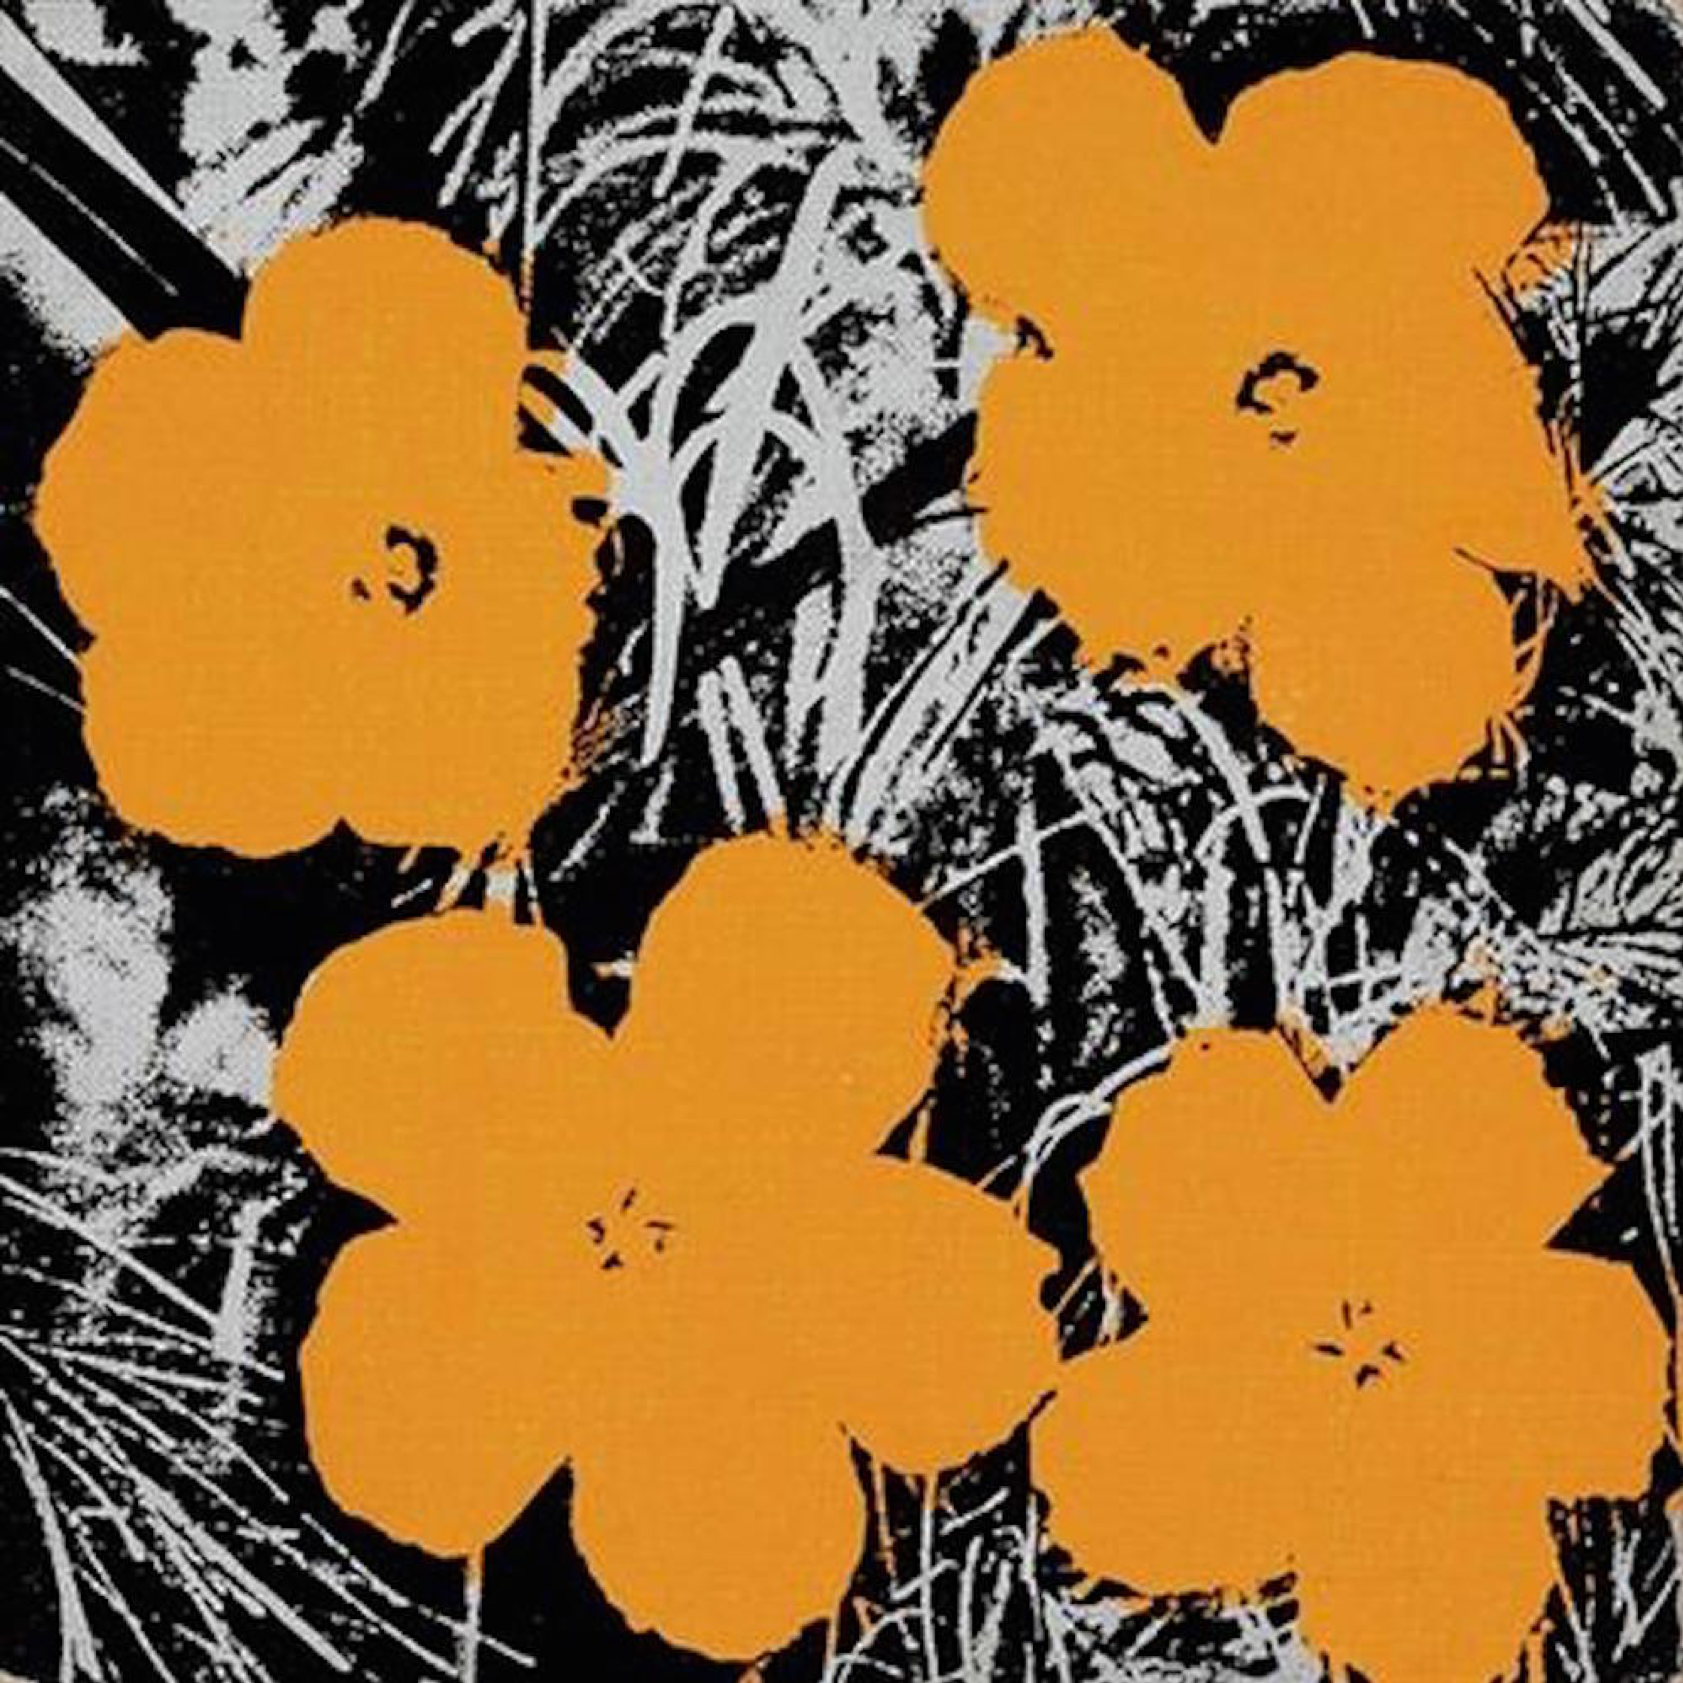 Flowers - Andy Warhol